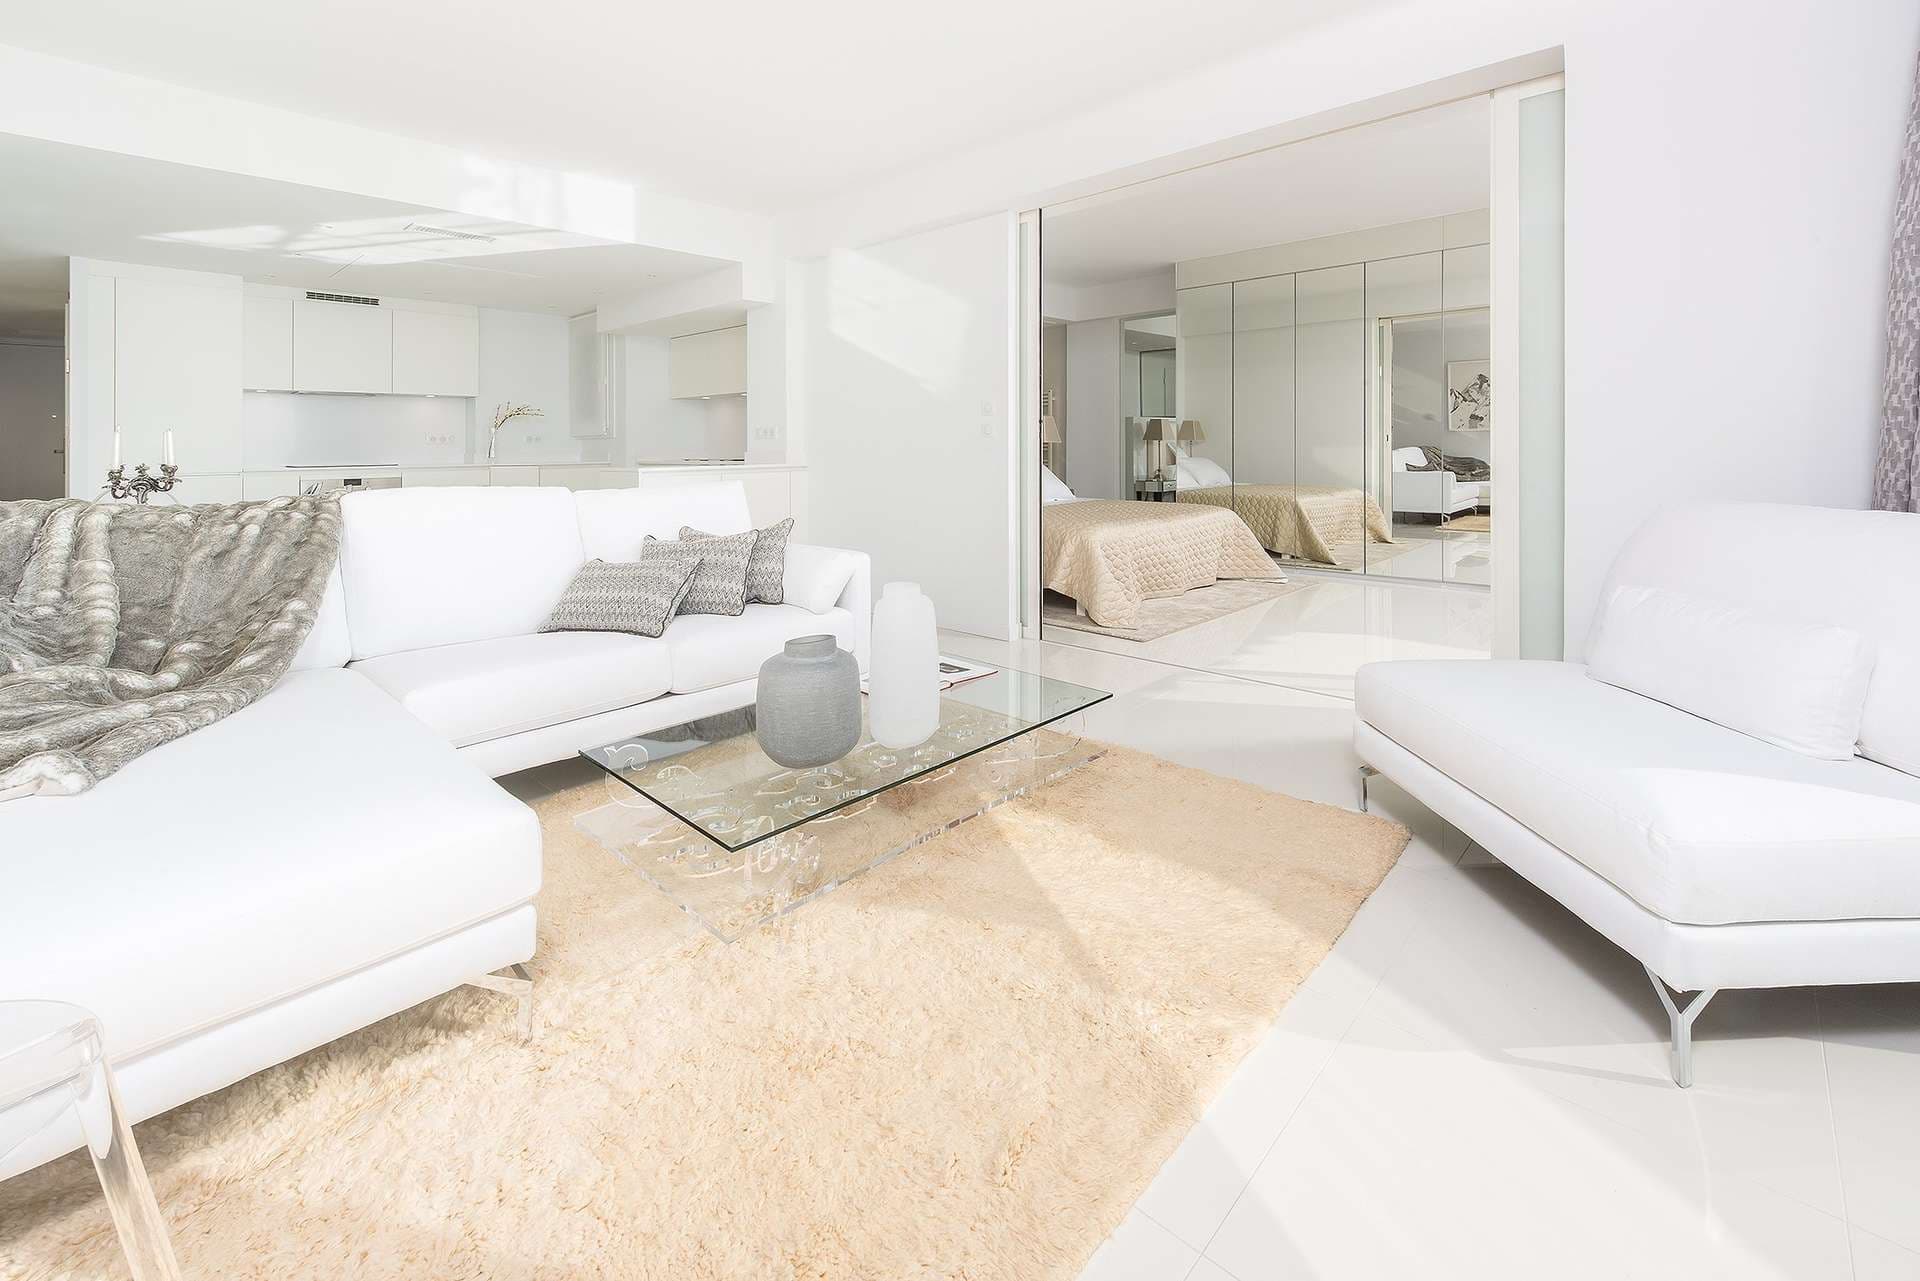 2 Bedroom Apartment For Sale Cannes Lp01009 262d5a94c1a23600.jpg